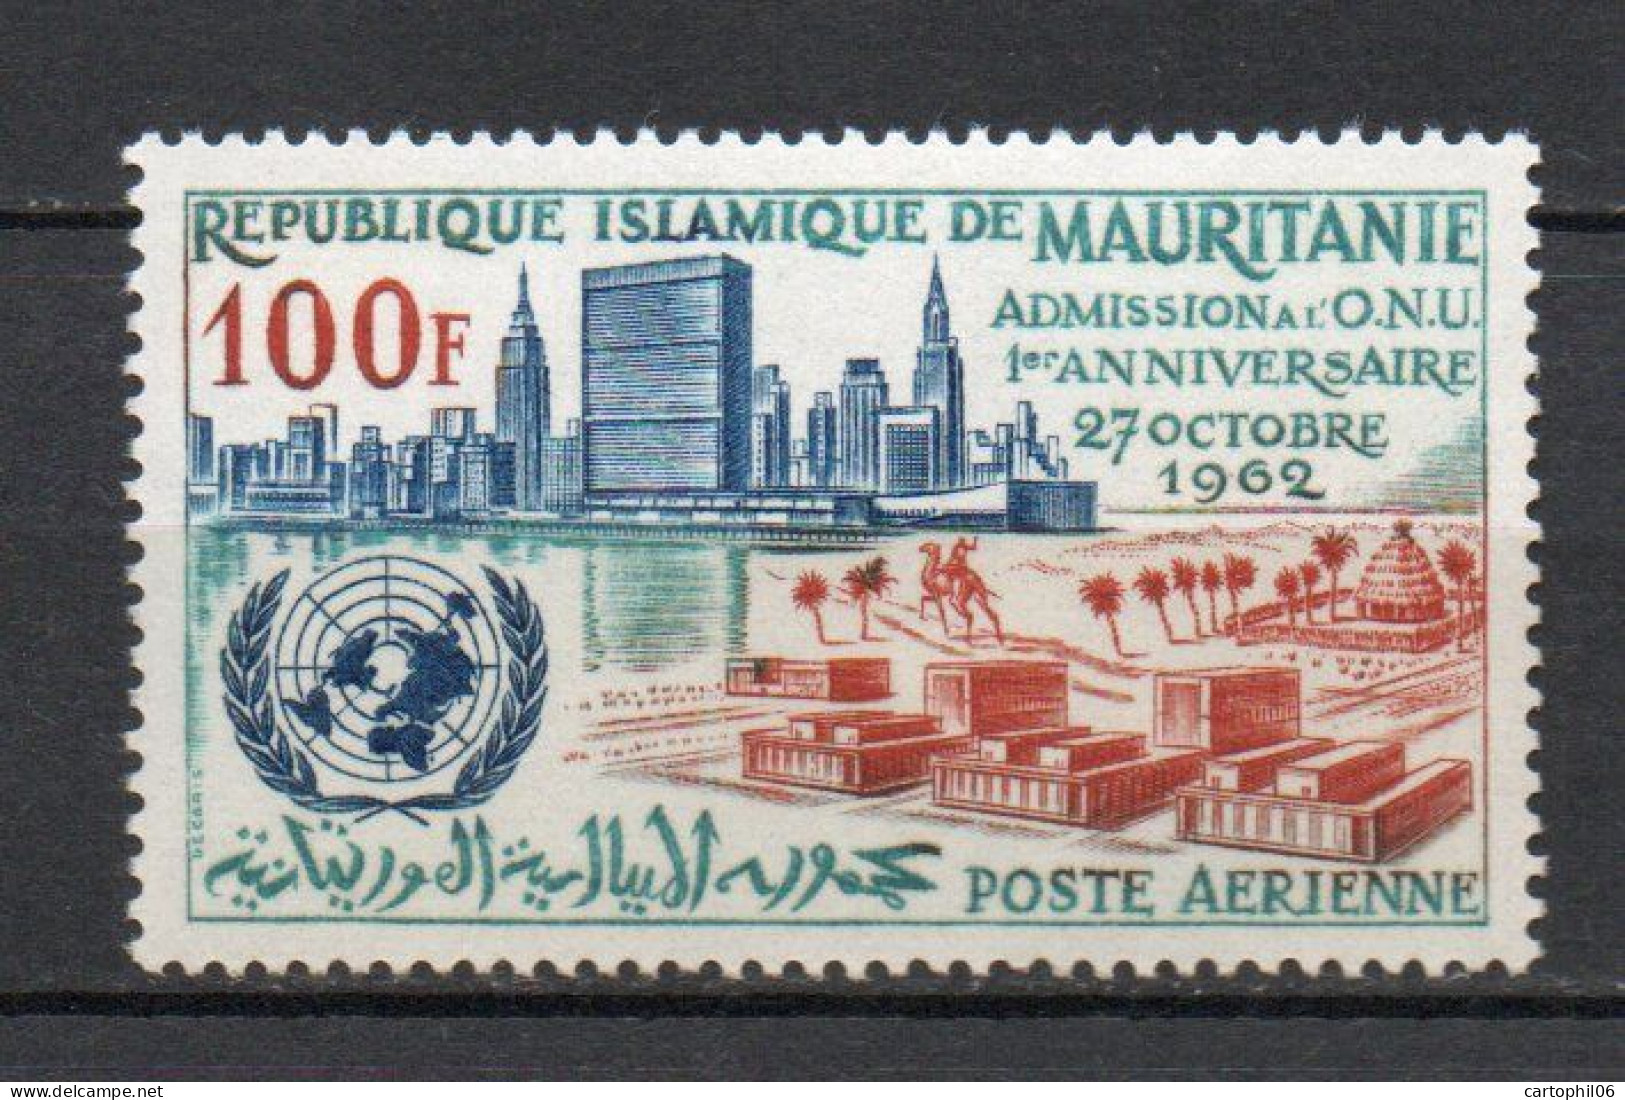 - MAURITANIE Poste Aérienne N° 22 Neuf ** MNH - 100 F. ADMISSION AUX NATIONS UNIES 1962 - - Mauritanie (1960-...)